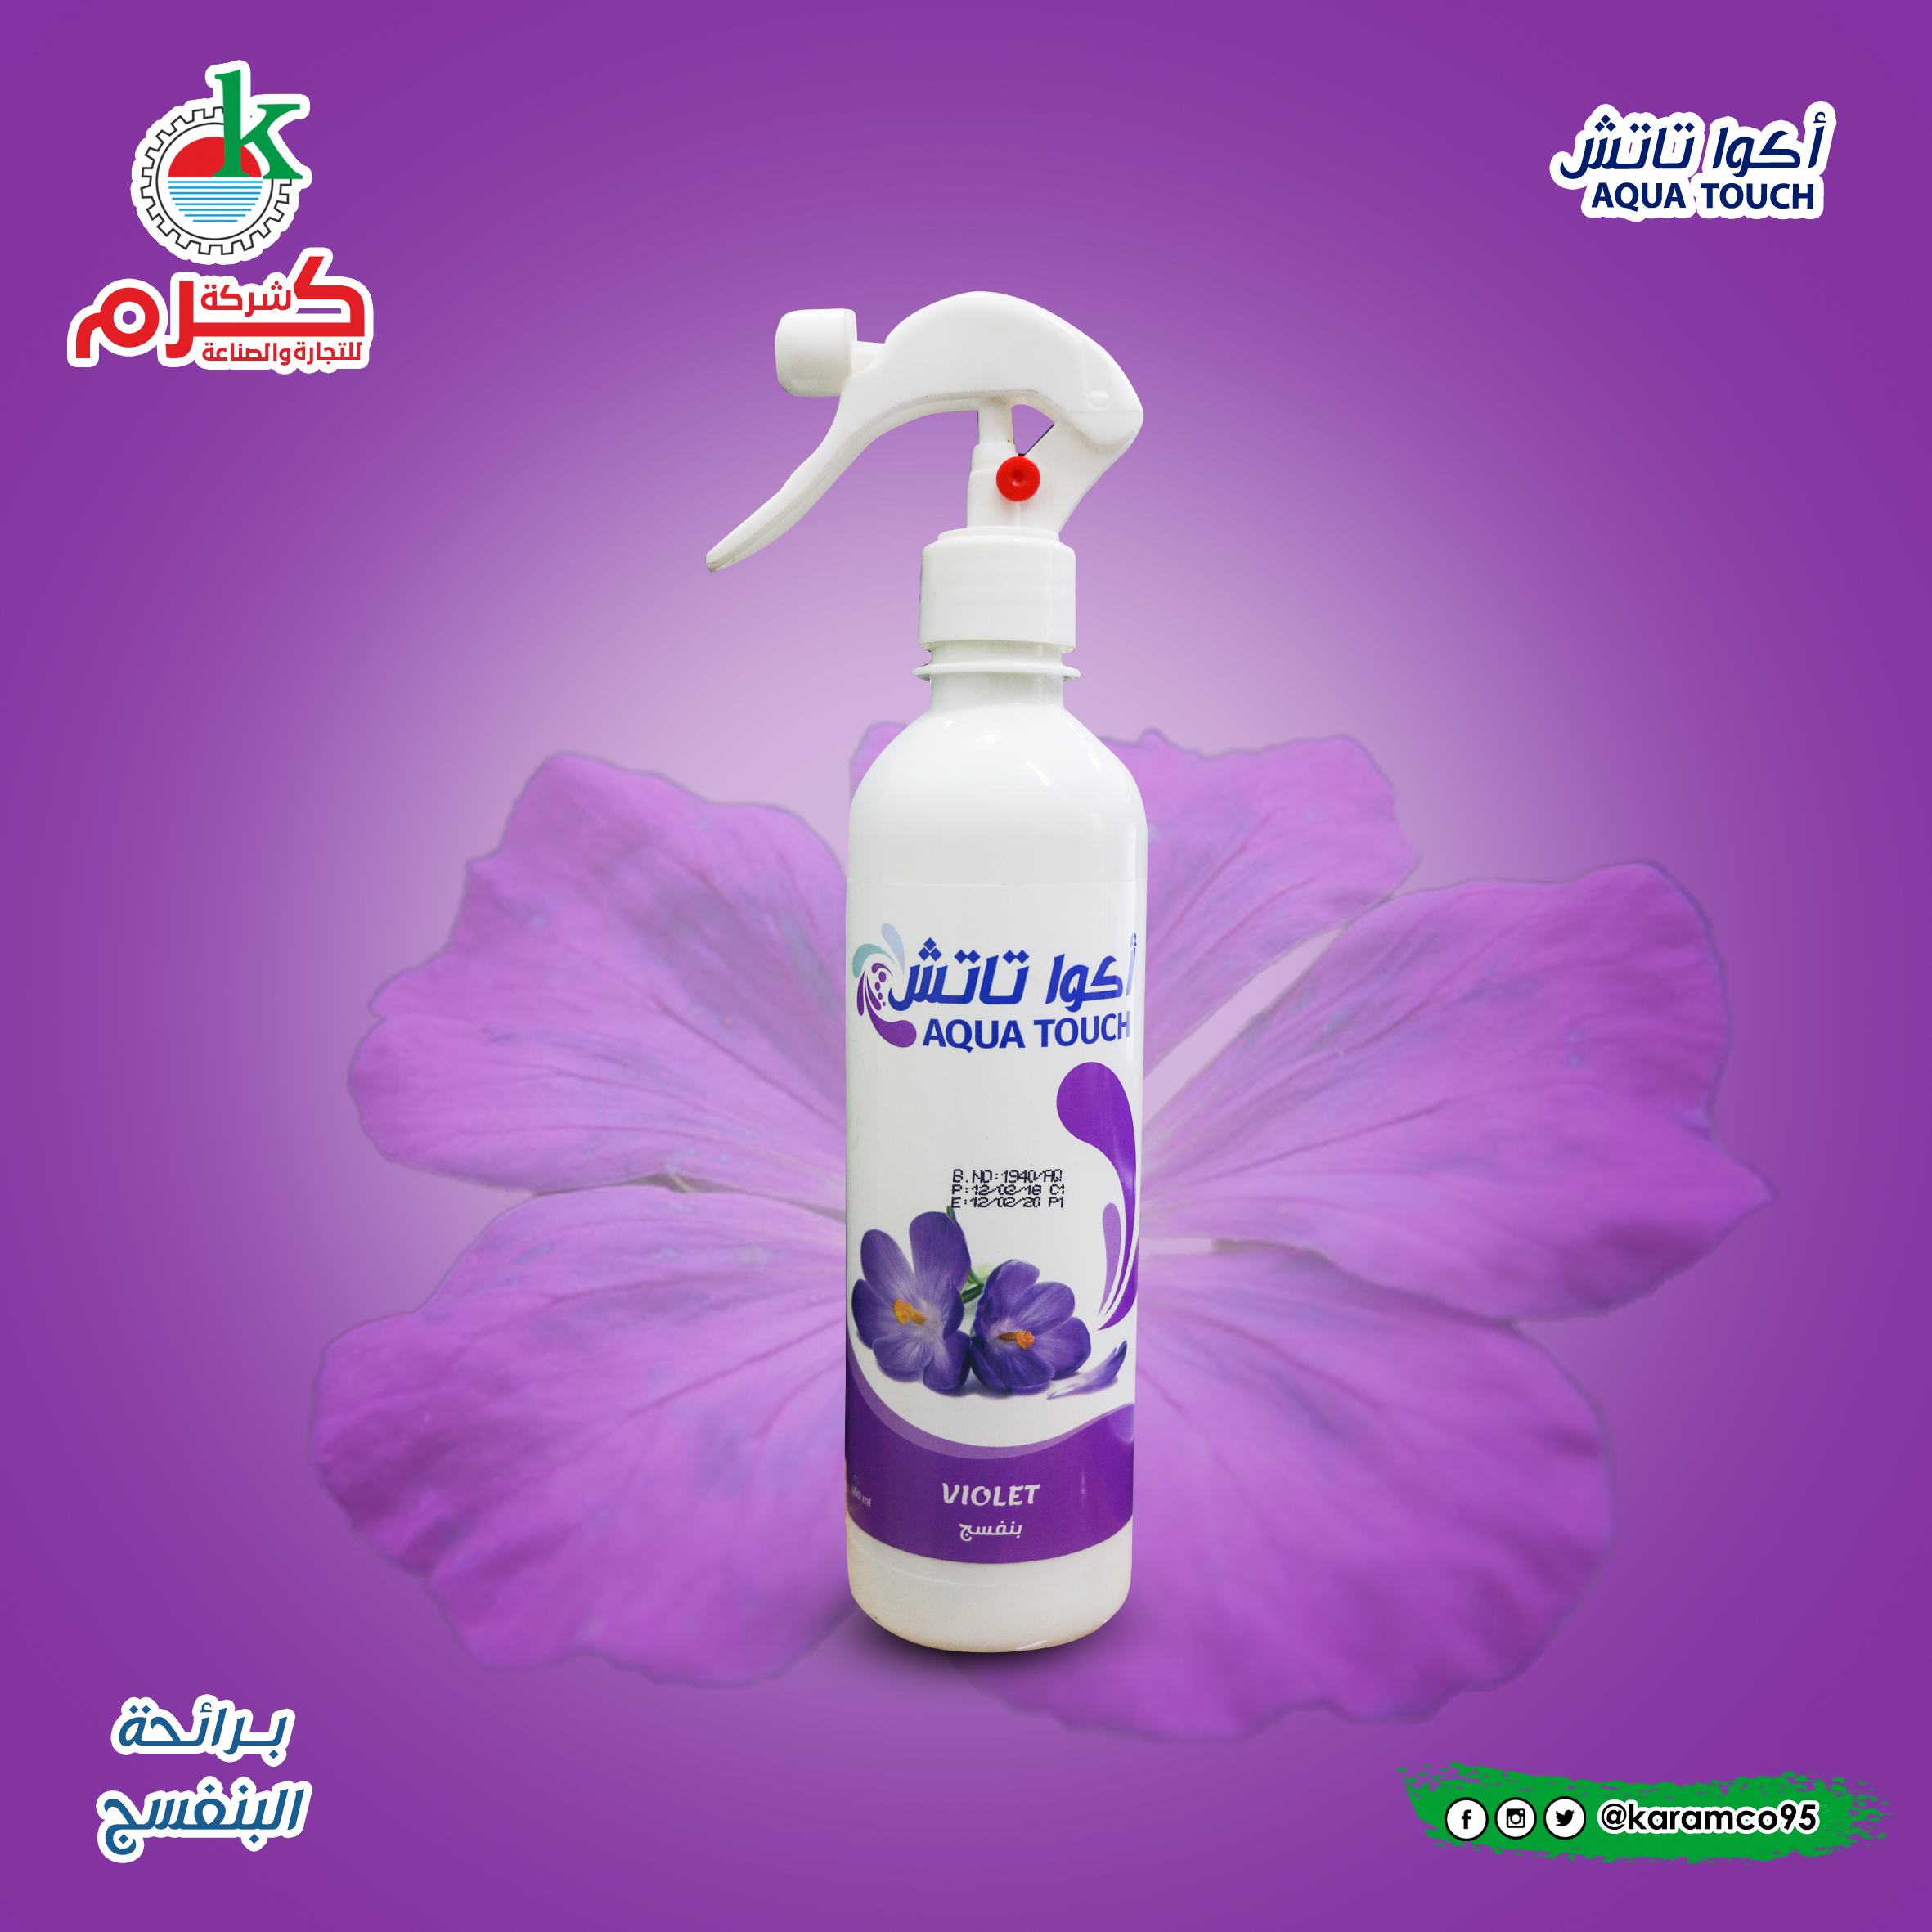 Aqua Touch Air Freshener Violet